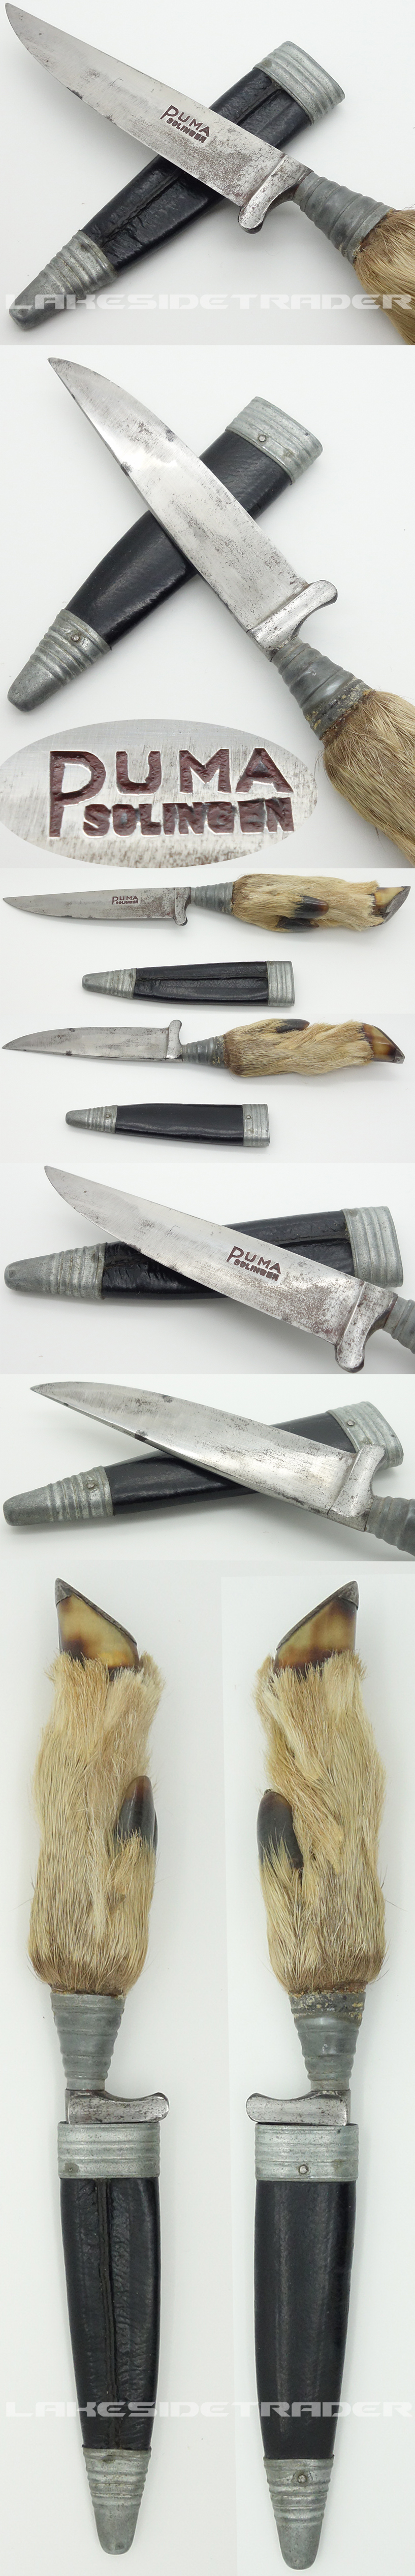 Puma Fighting/Skinner Knife